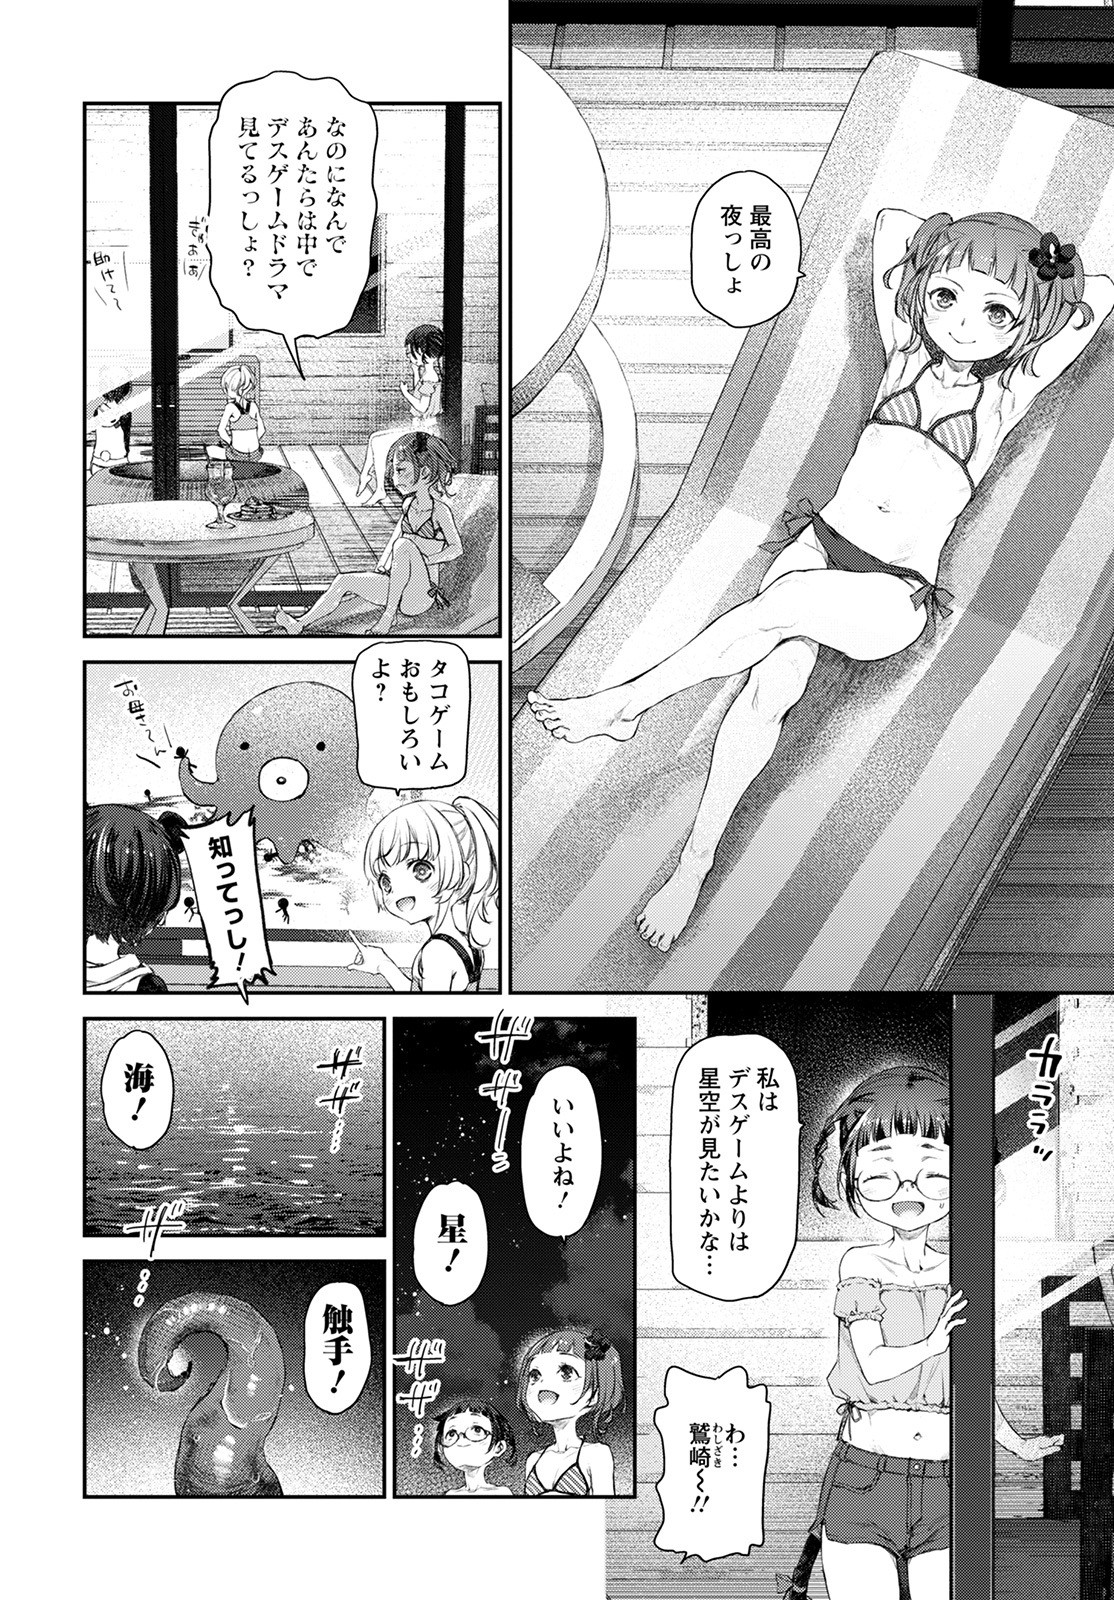 Uchi no Maid ga Uzasugiru! - Chapter 51 - Page 10